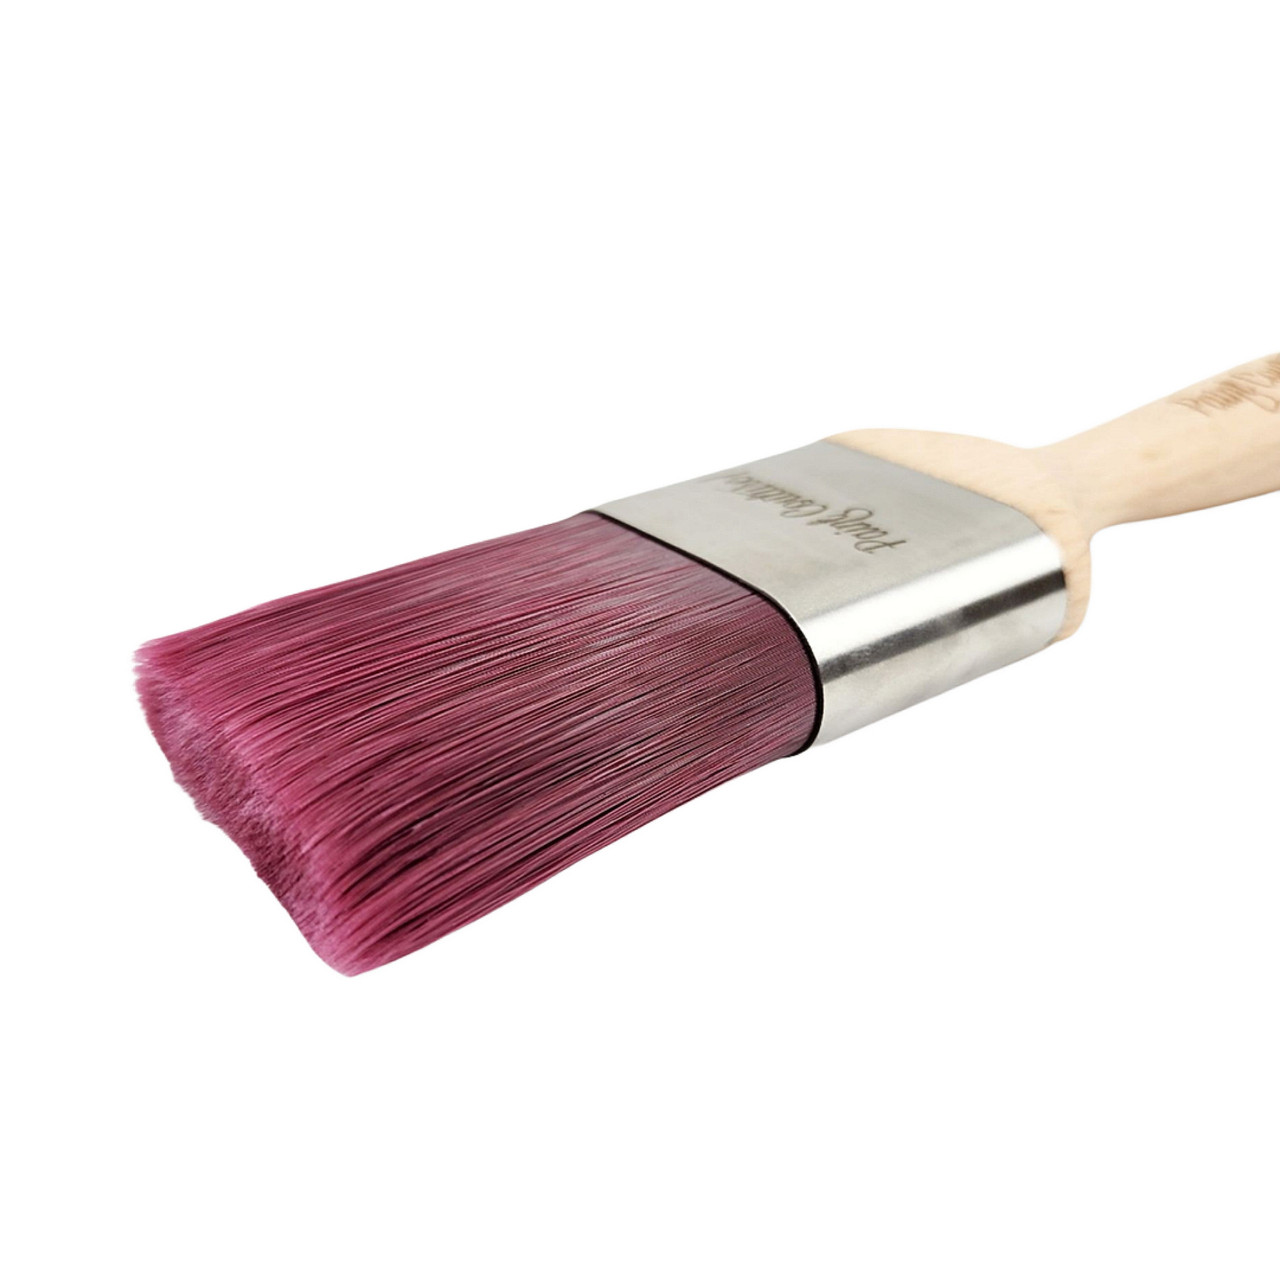 2 Flat Synthetic Paint Brush